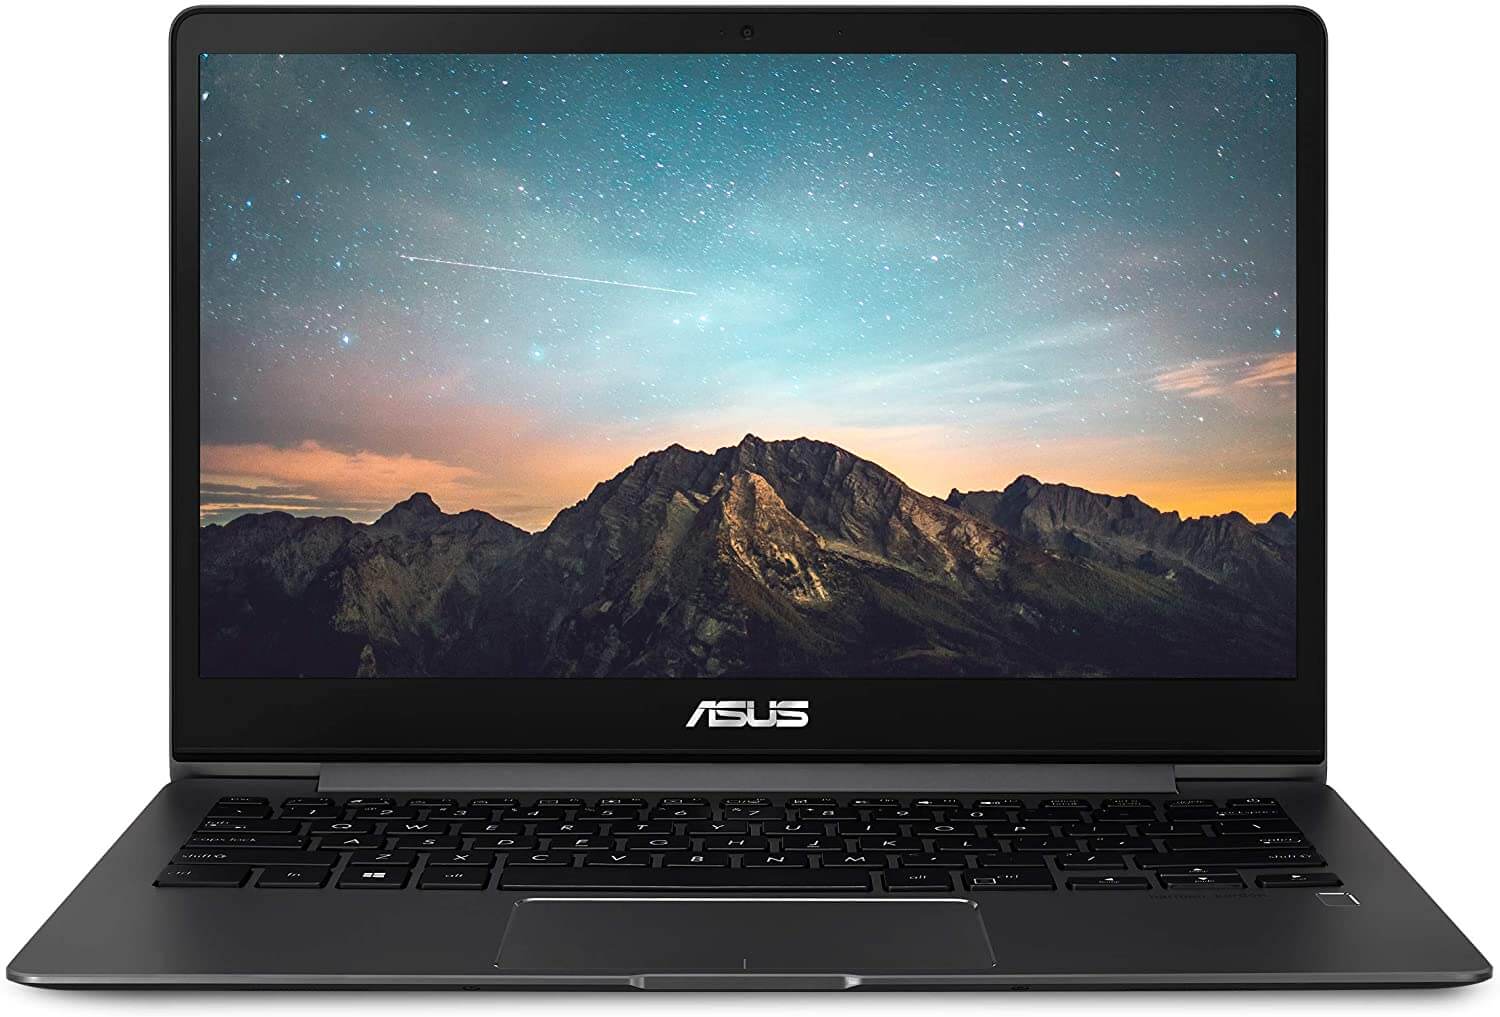 ASUS ZenBook 13 Ultra-Slim Laptop- 13.3” Full HD Wideview